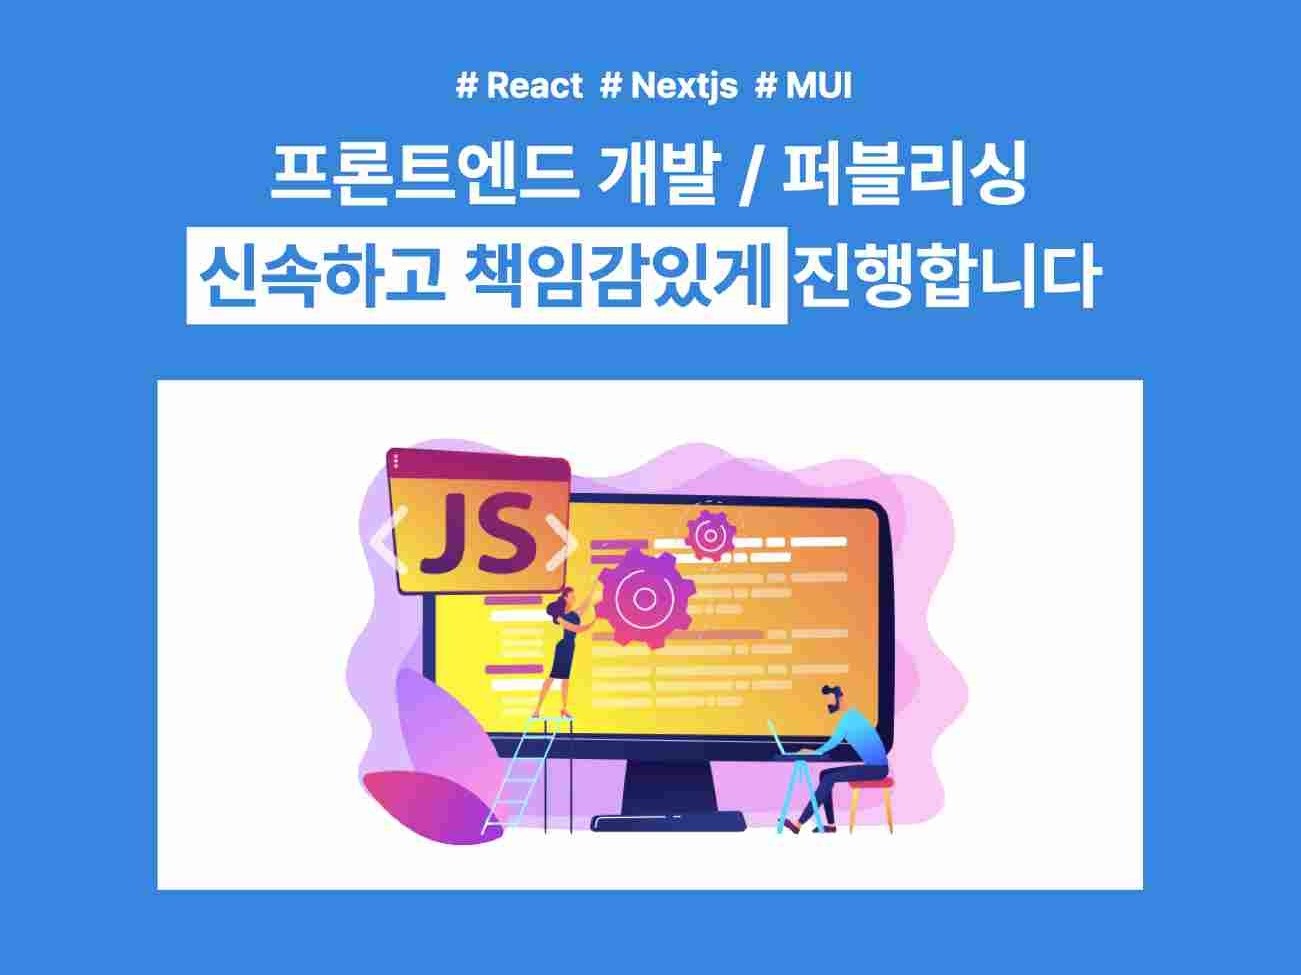 React, Nextjs, MUI 프론트엔드/퍼블리싱